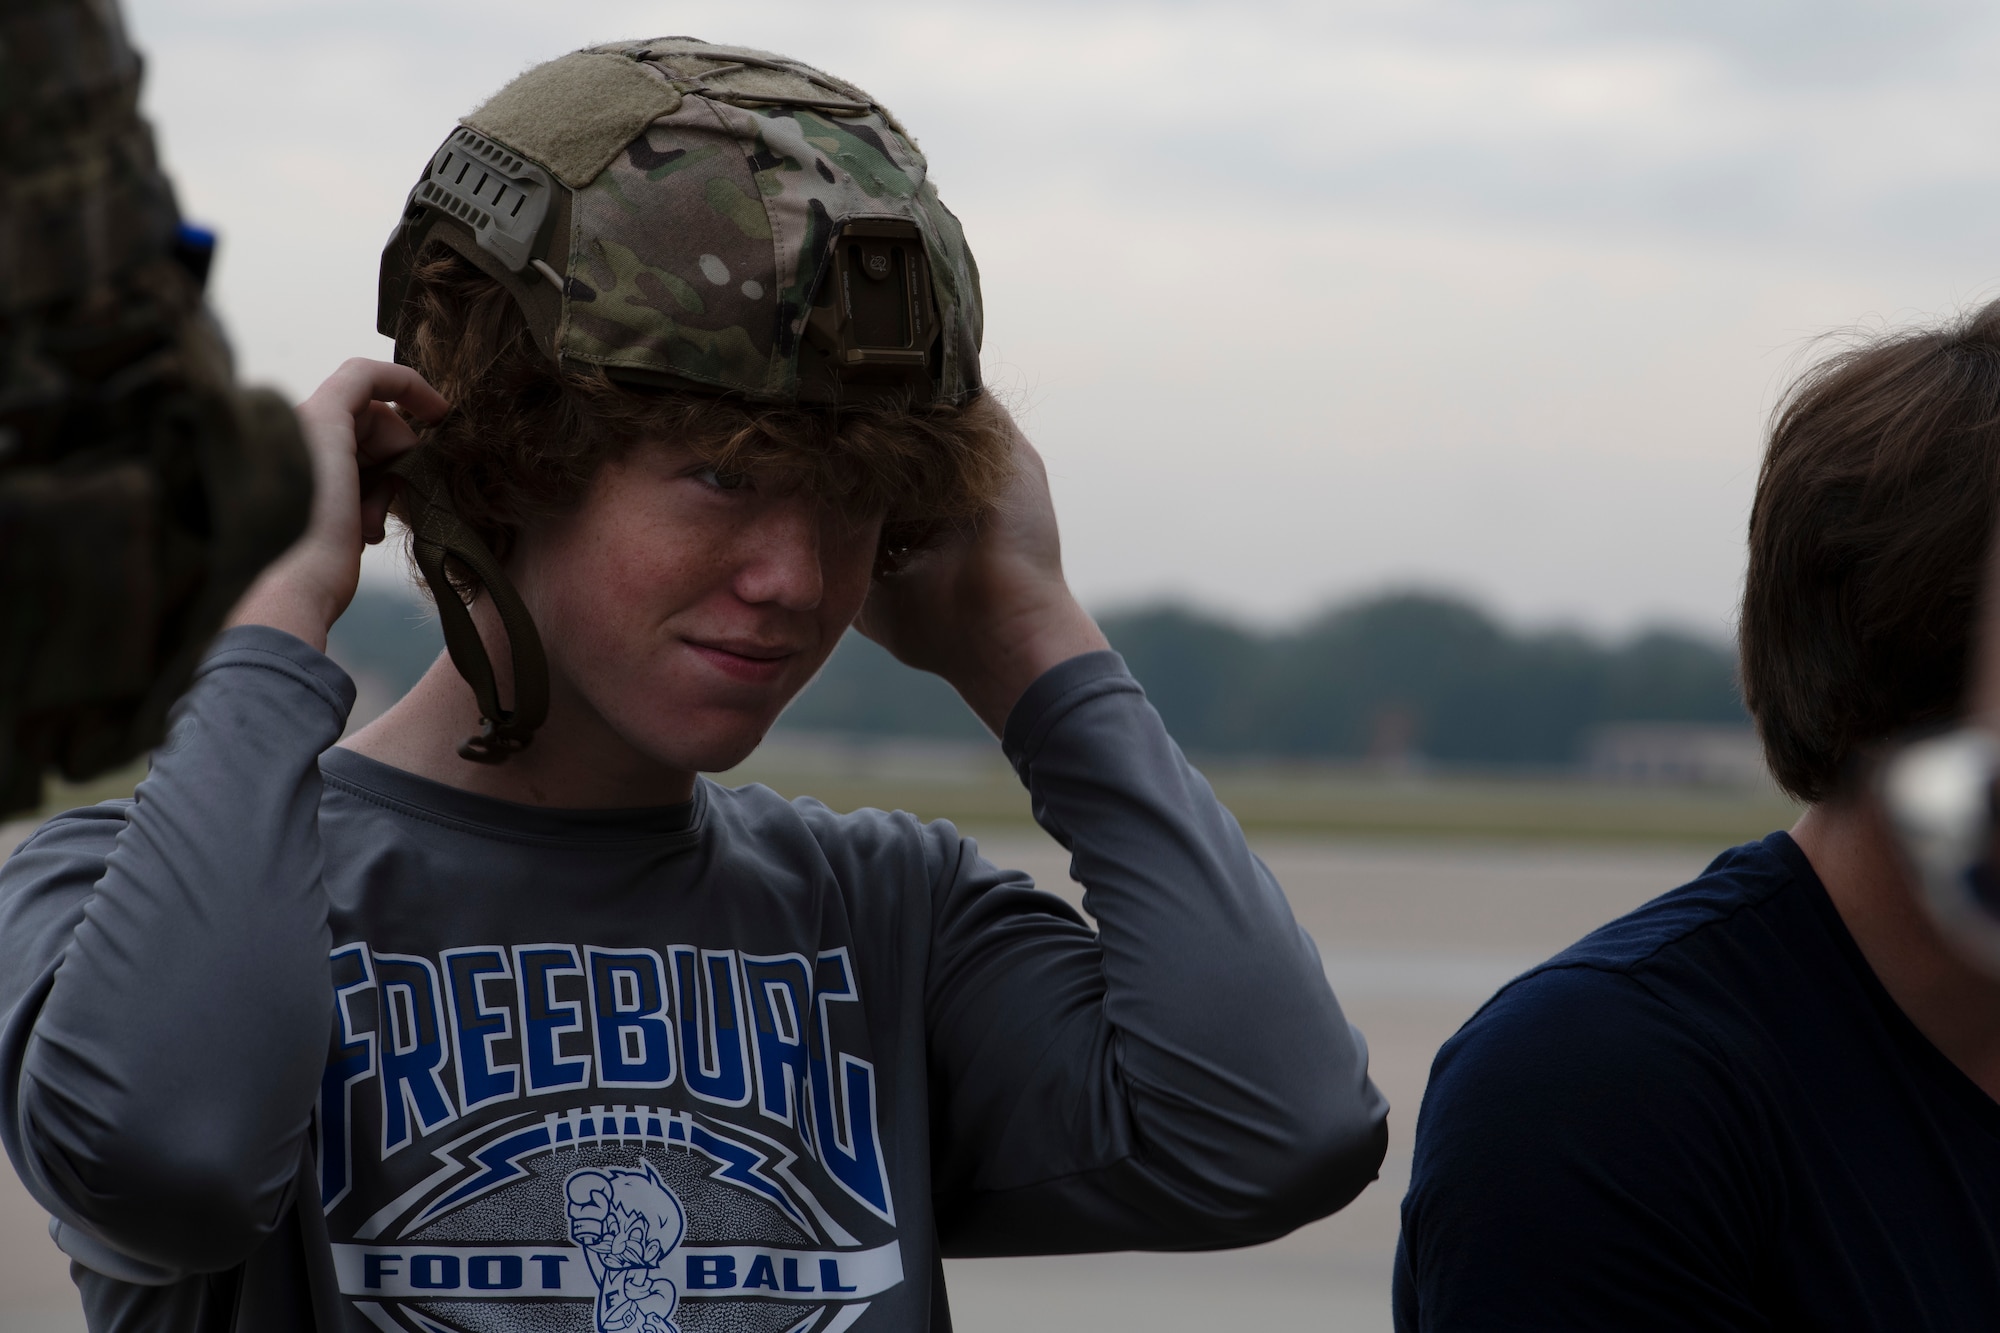 JROTC cadets visit Scott AFB